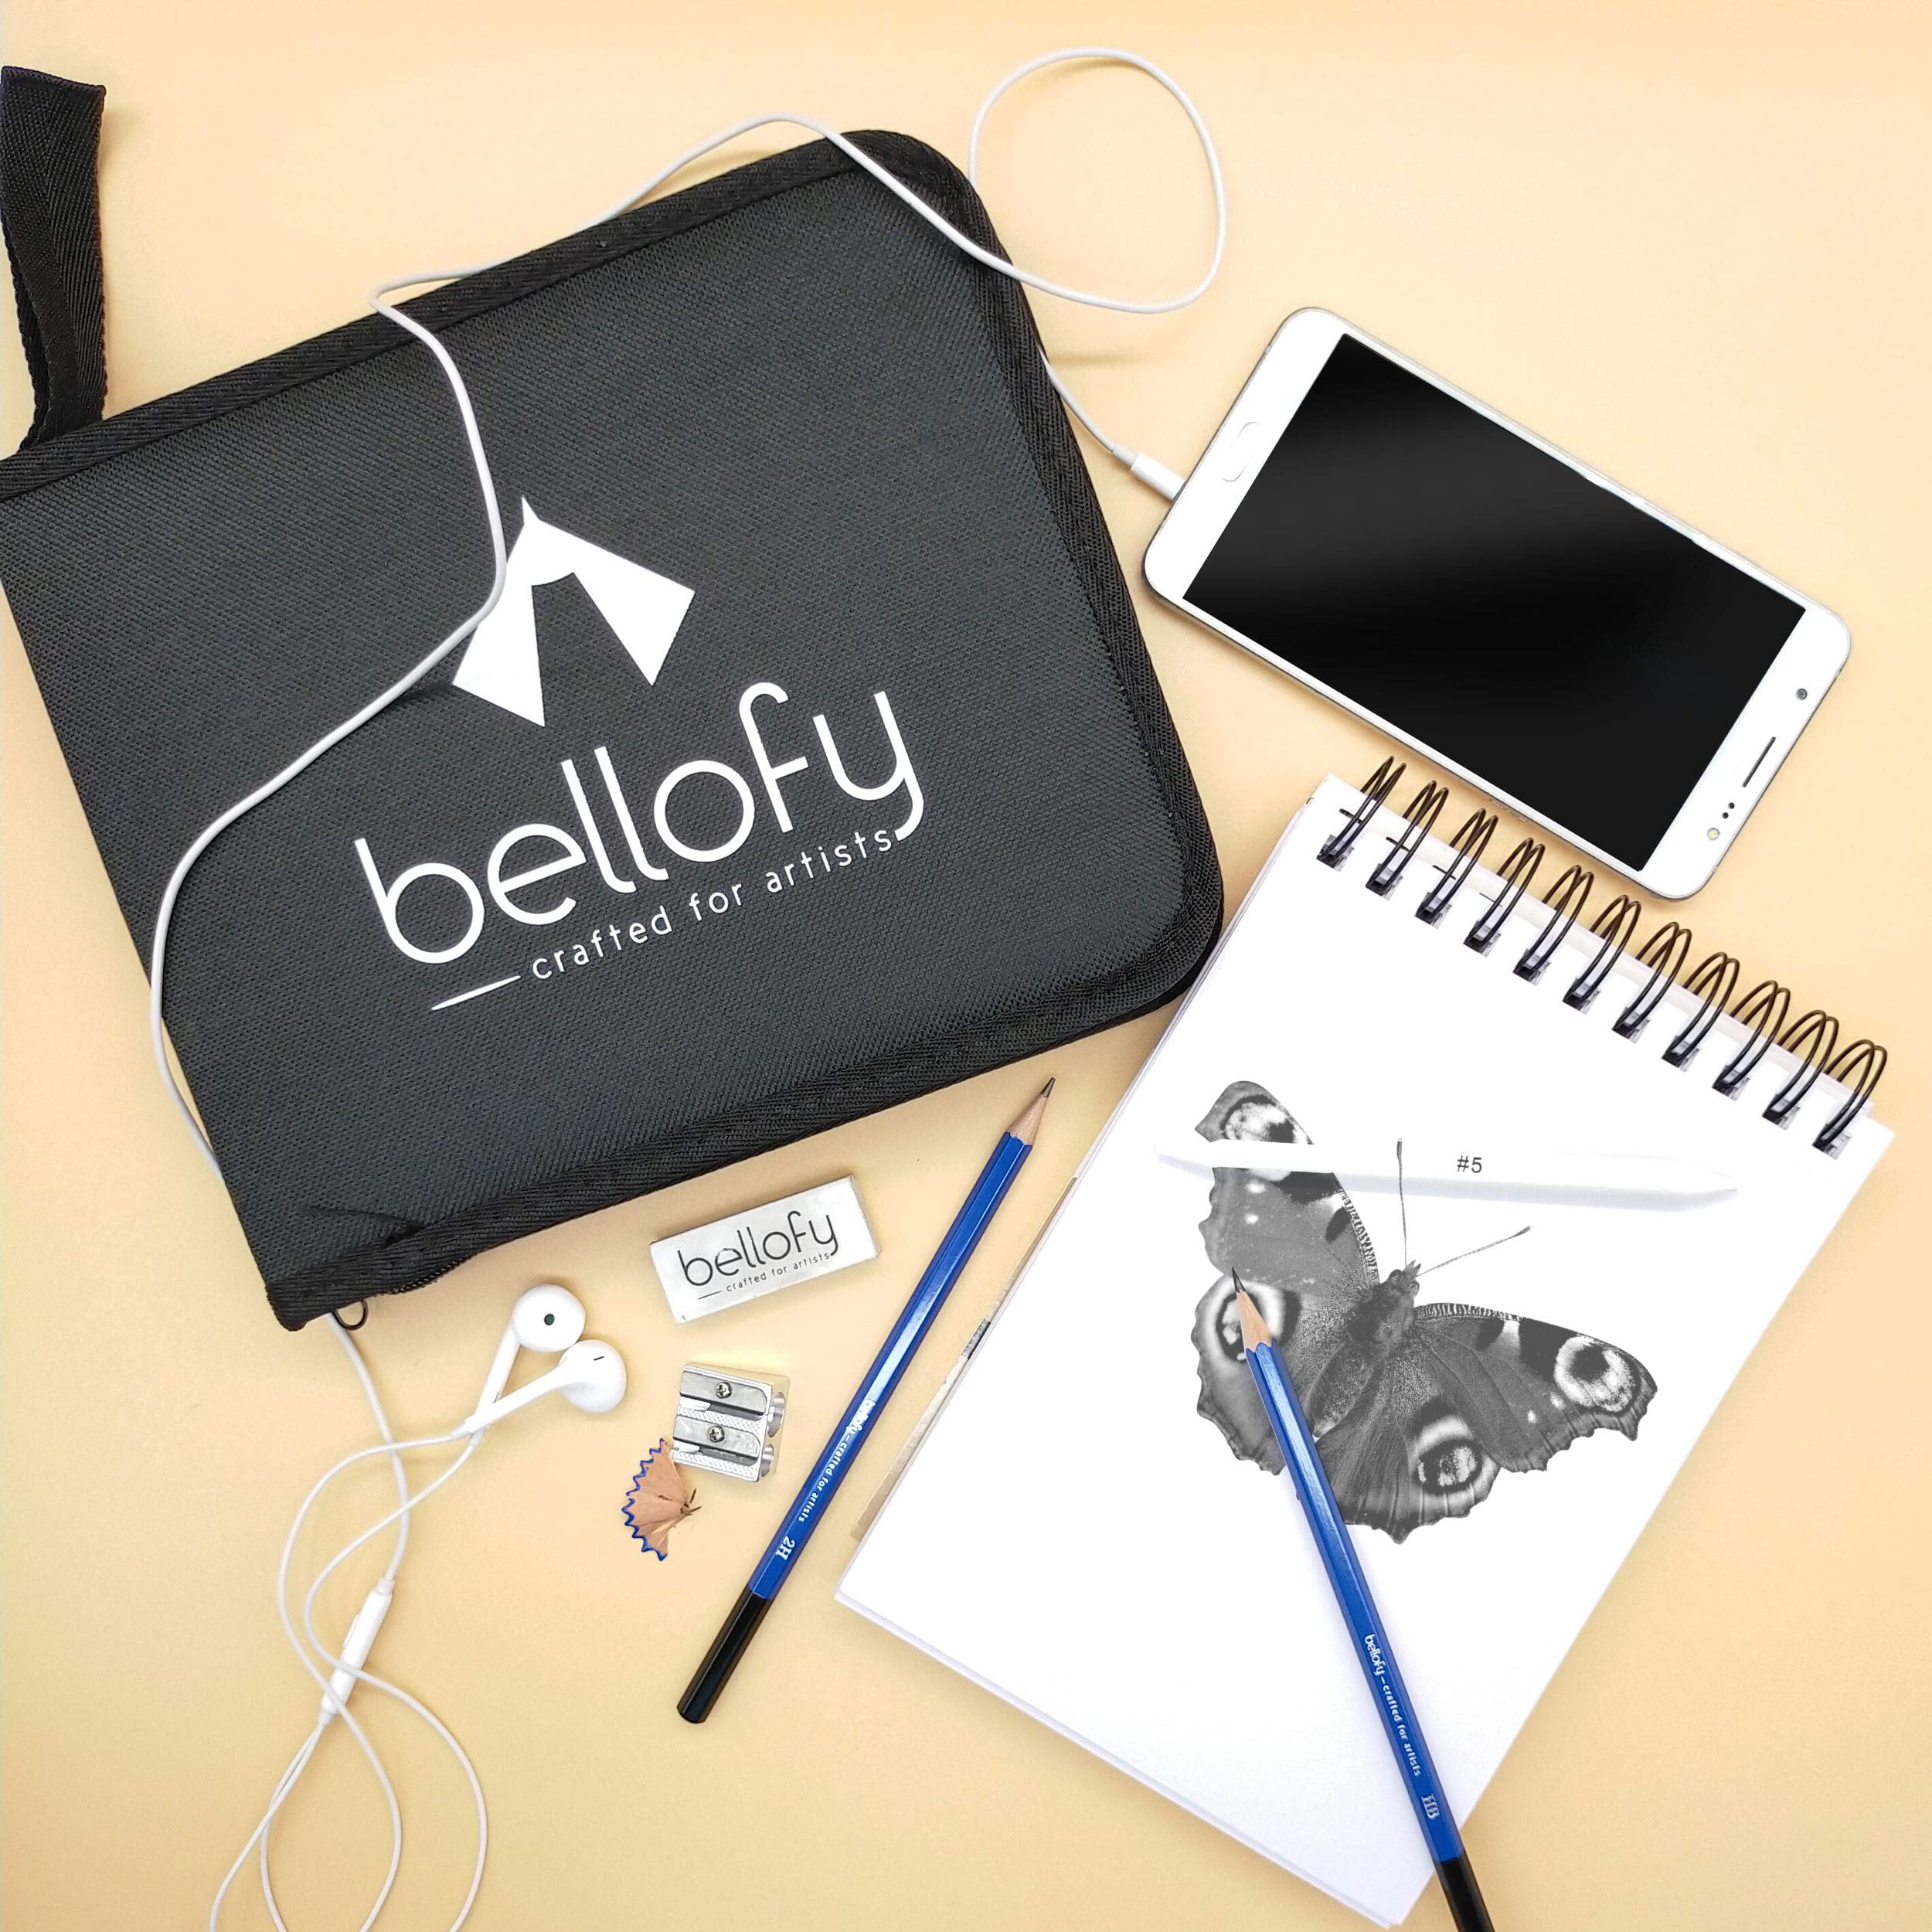 Bellofy 72 Pack Drawing Kit with 100 Sheets Drawing Pad